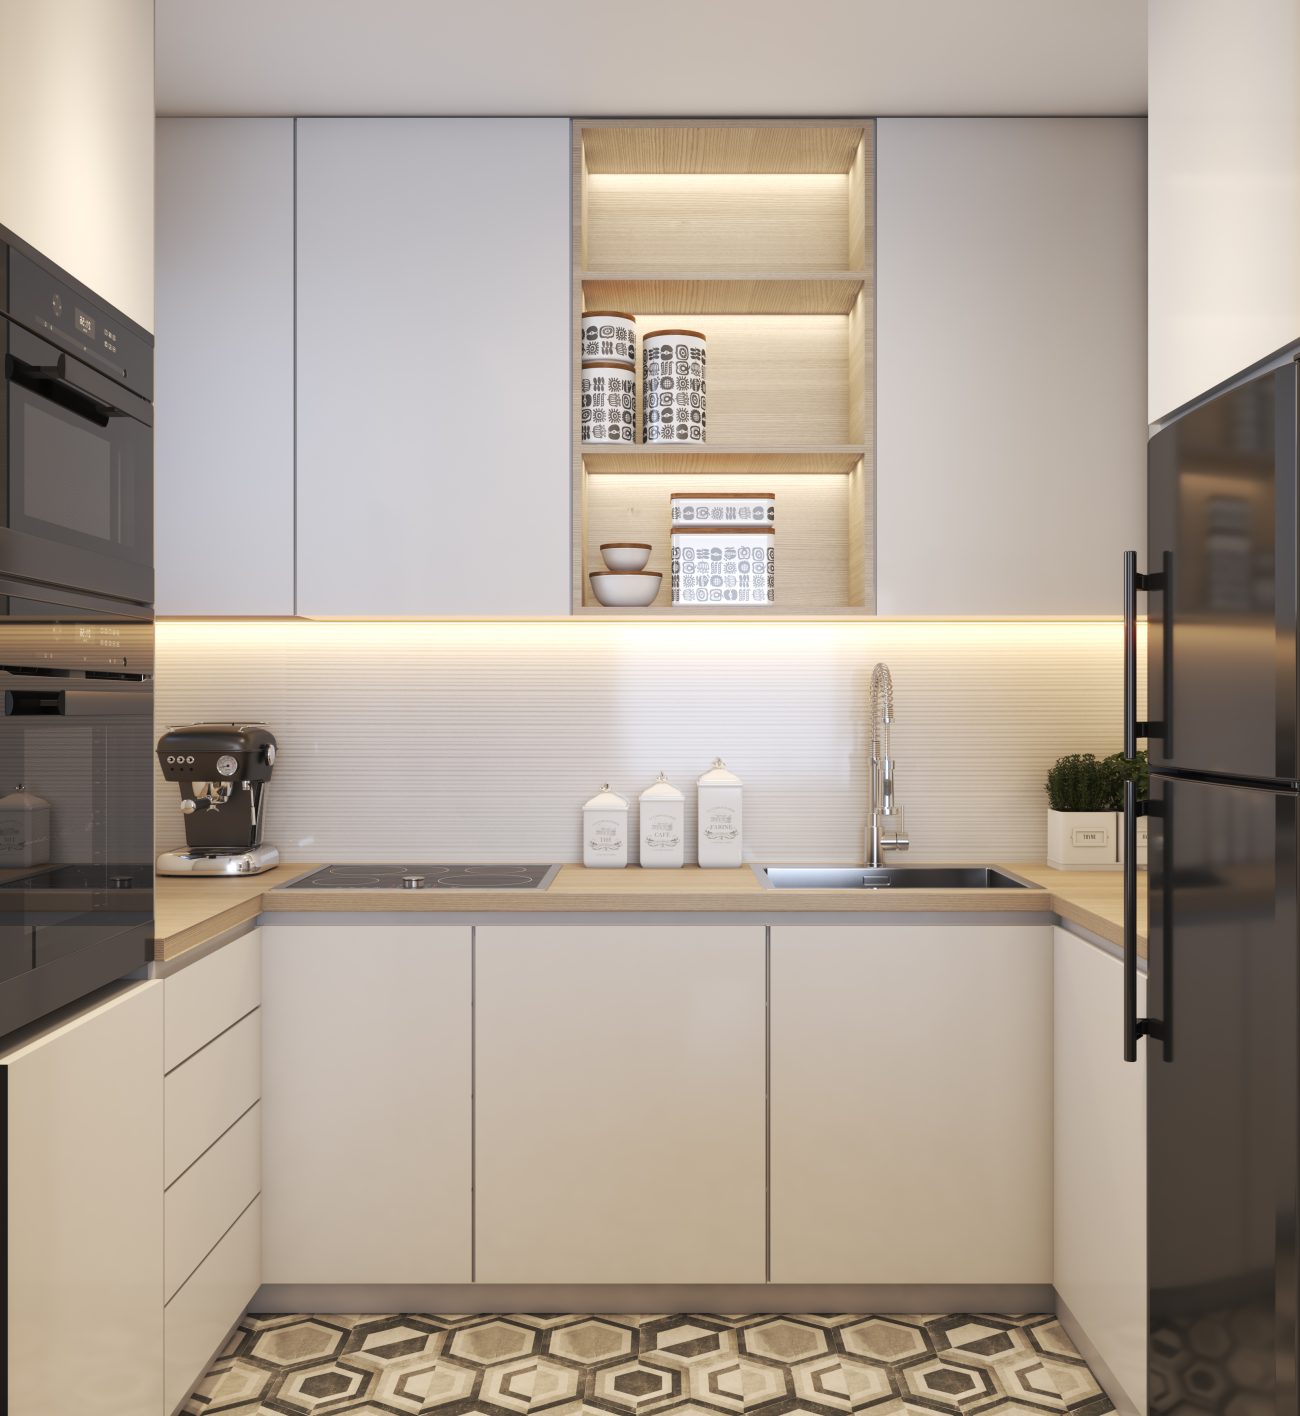 White kitchen with black appliances, floor with hexagonal pattern, backsplash illuminated by indirect lighting